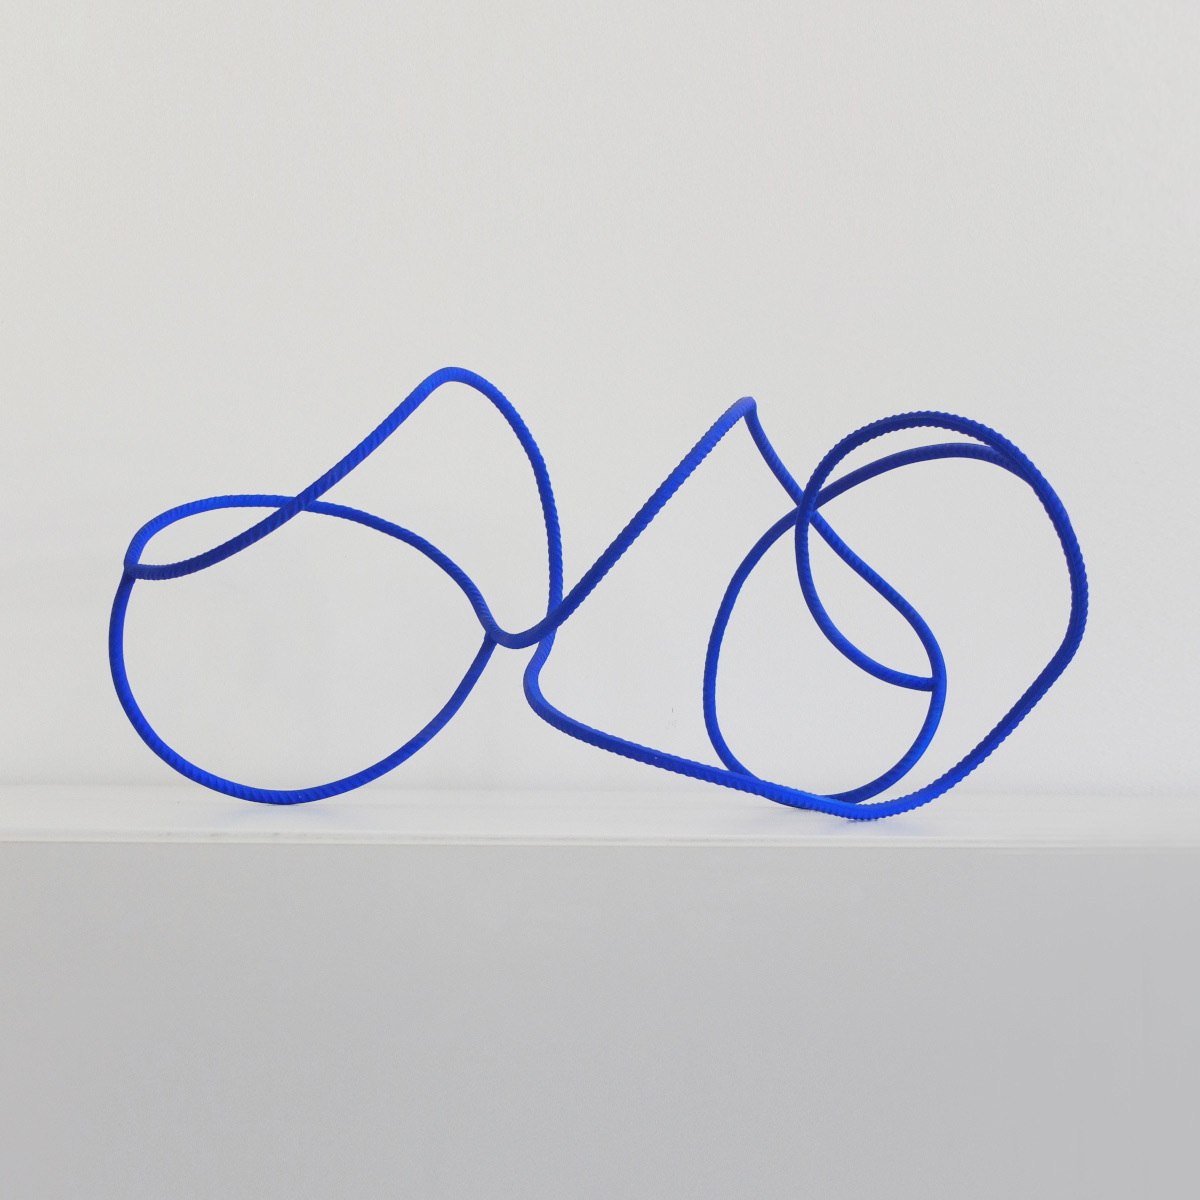 Alex Palenski sculpture abstraite en fer à béton bleu klein